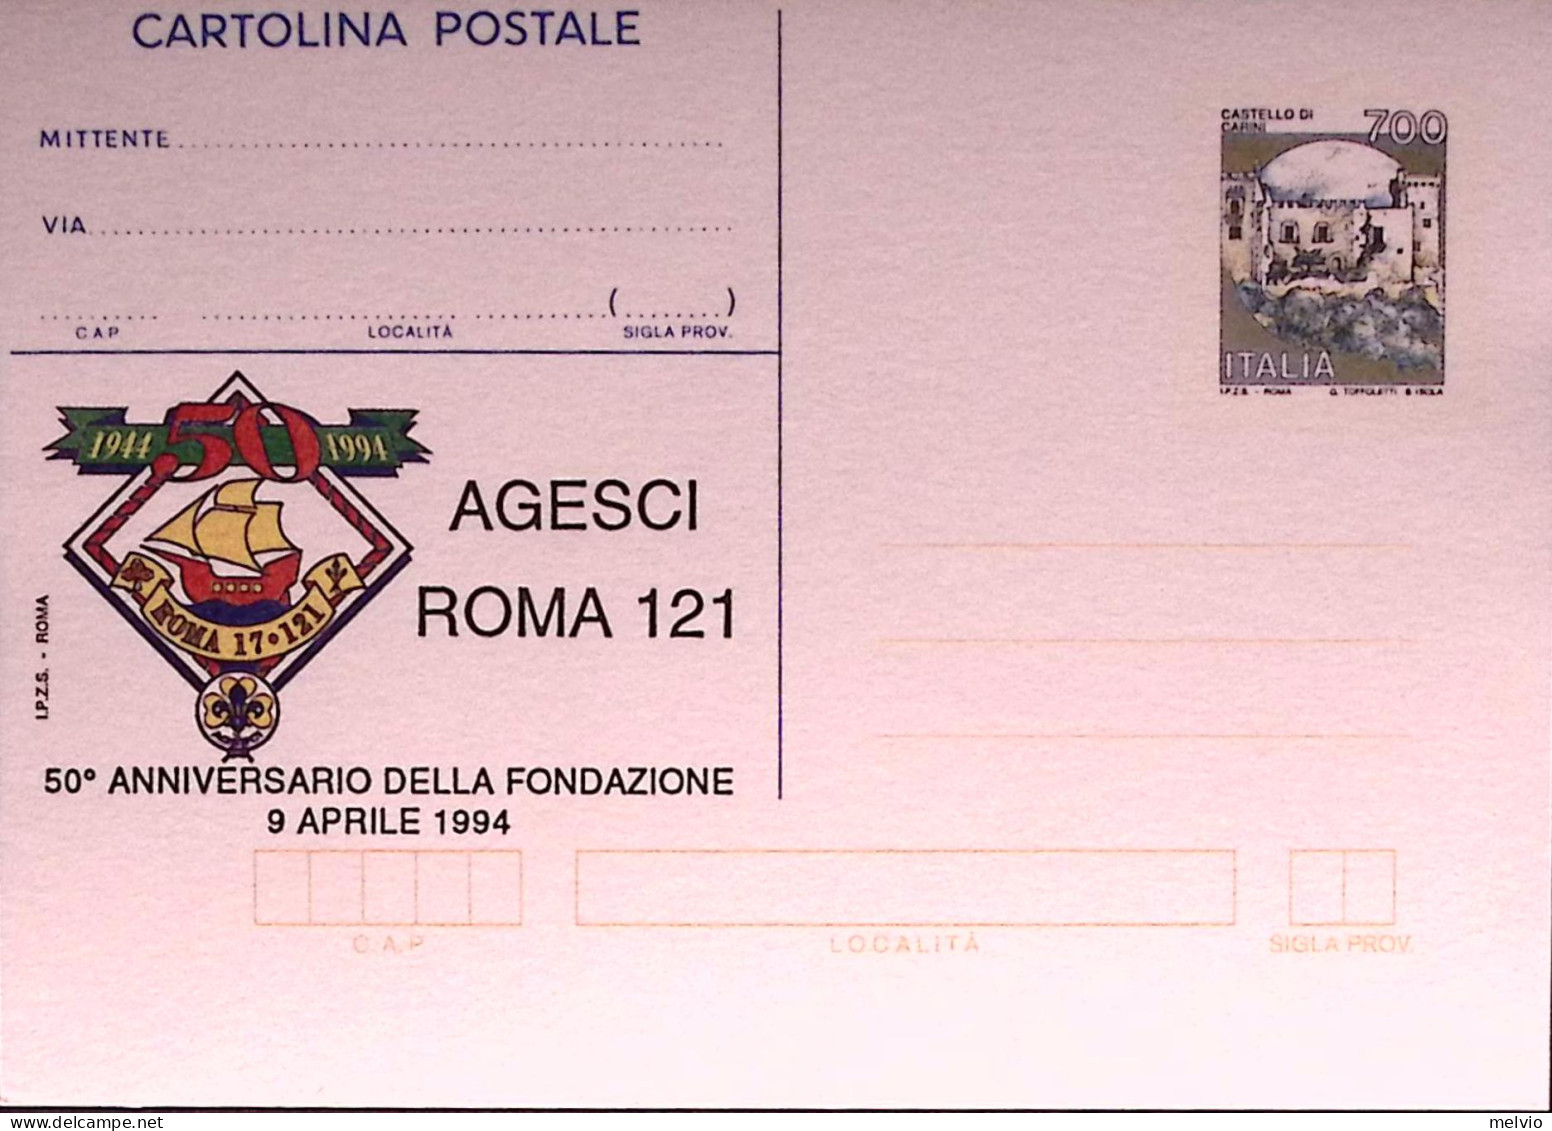 1994-AGESCI ROMA 121 Cartolina Postale IPZS Lire 700 Nuova - Ganzsachen